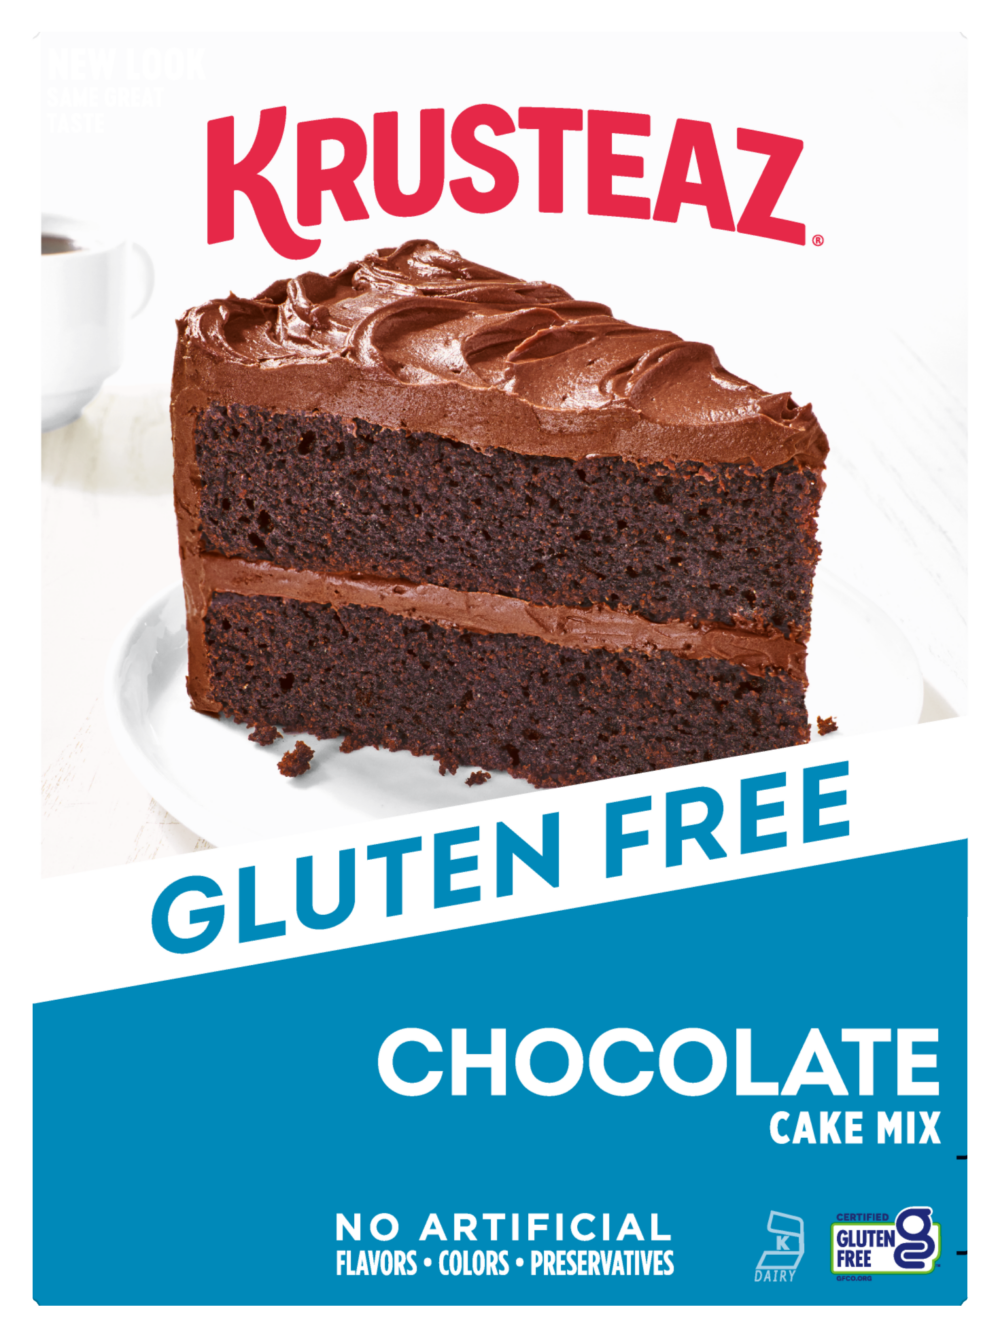 Box of Krusteaz Gluten Free Chocolate Cake Mix